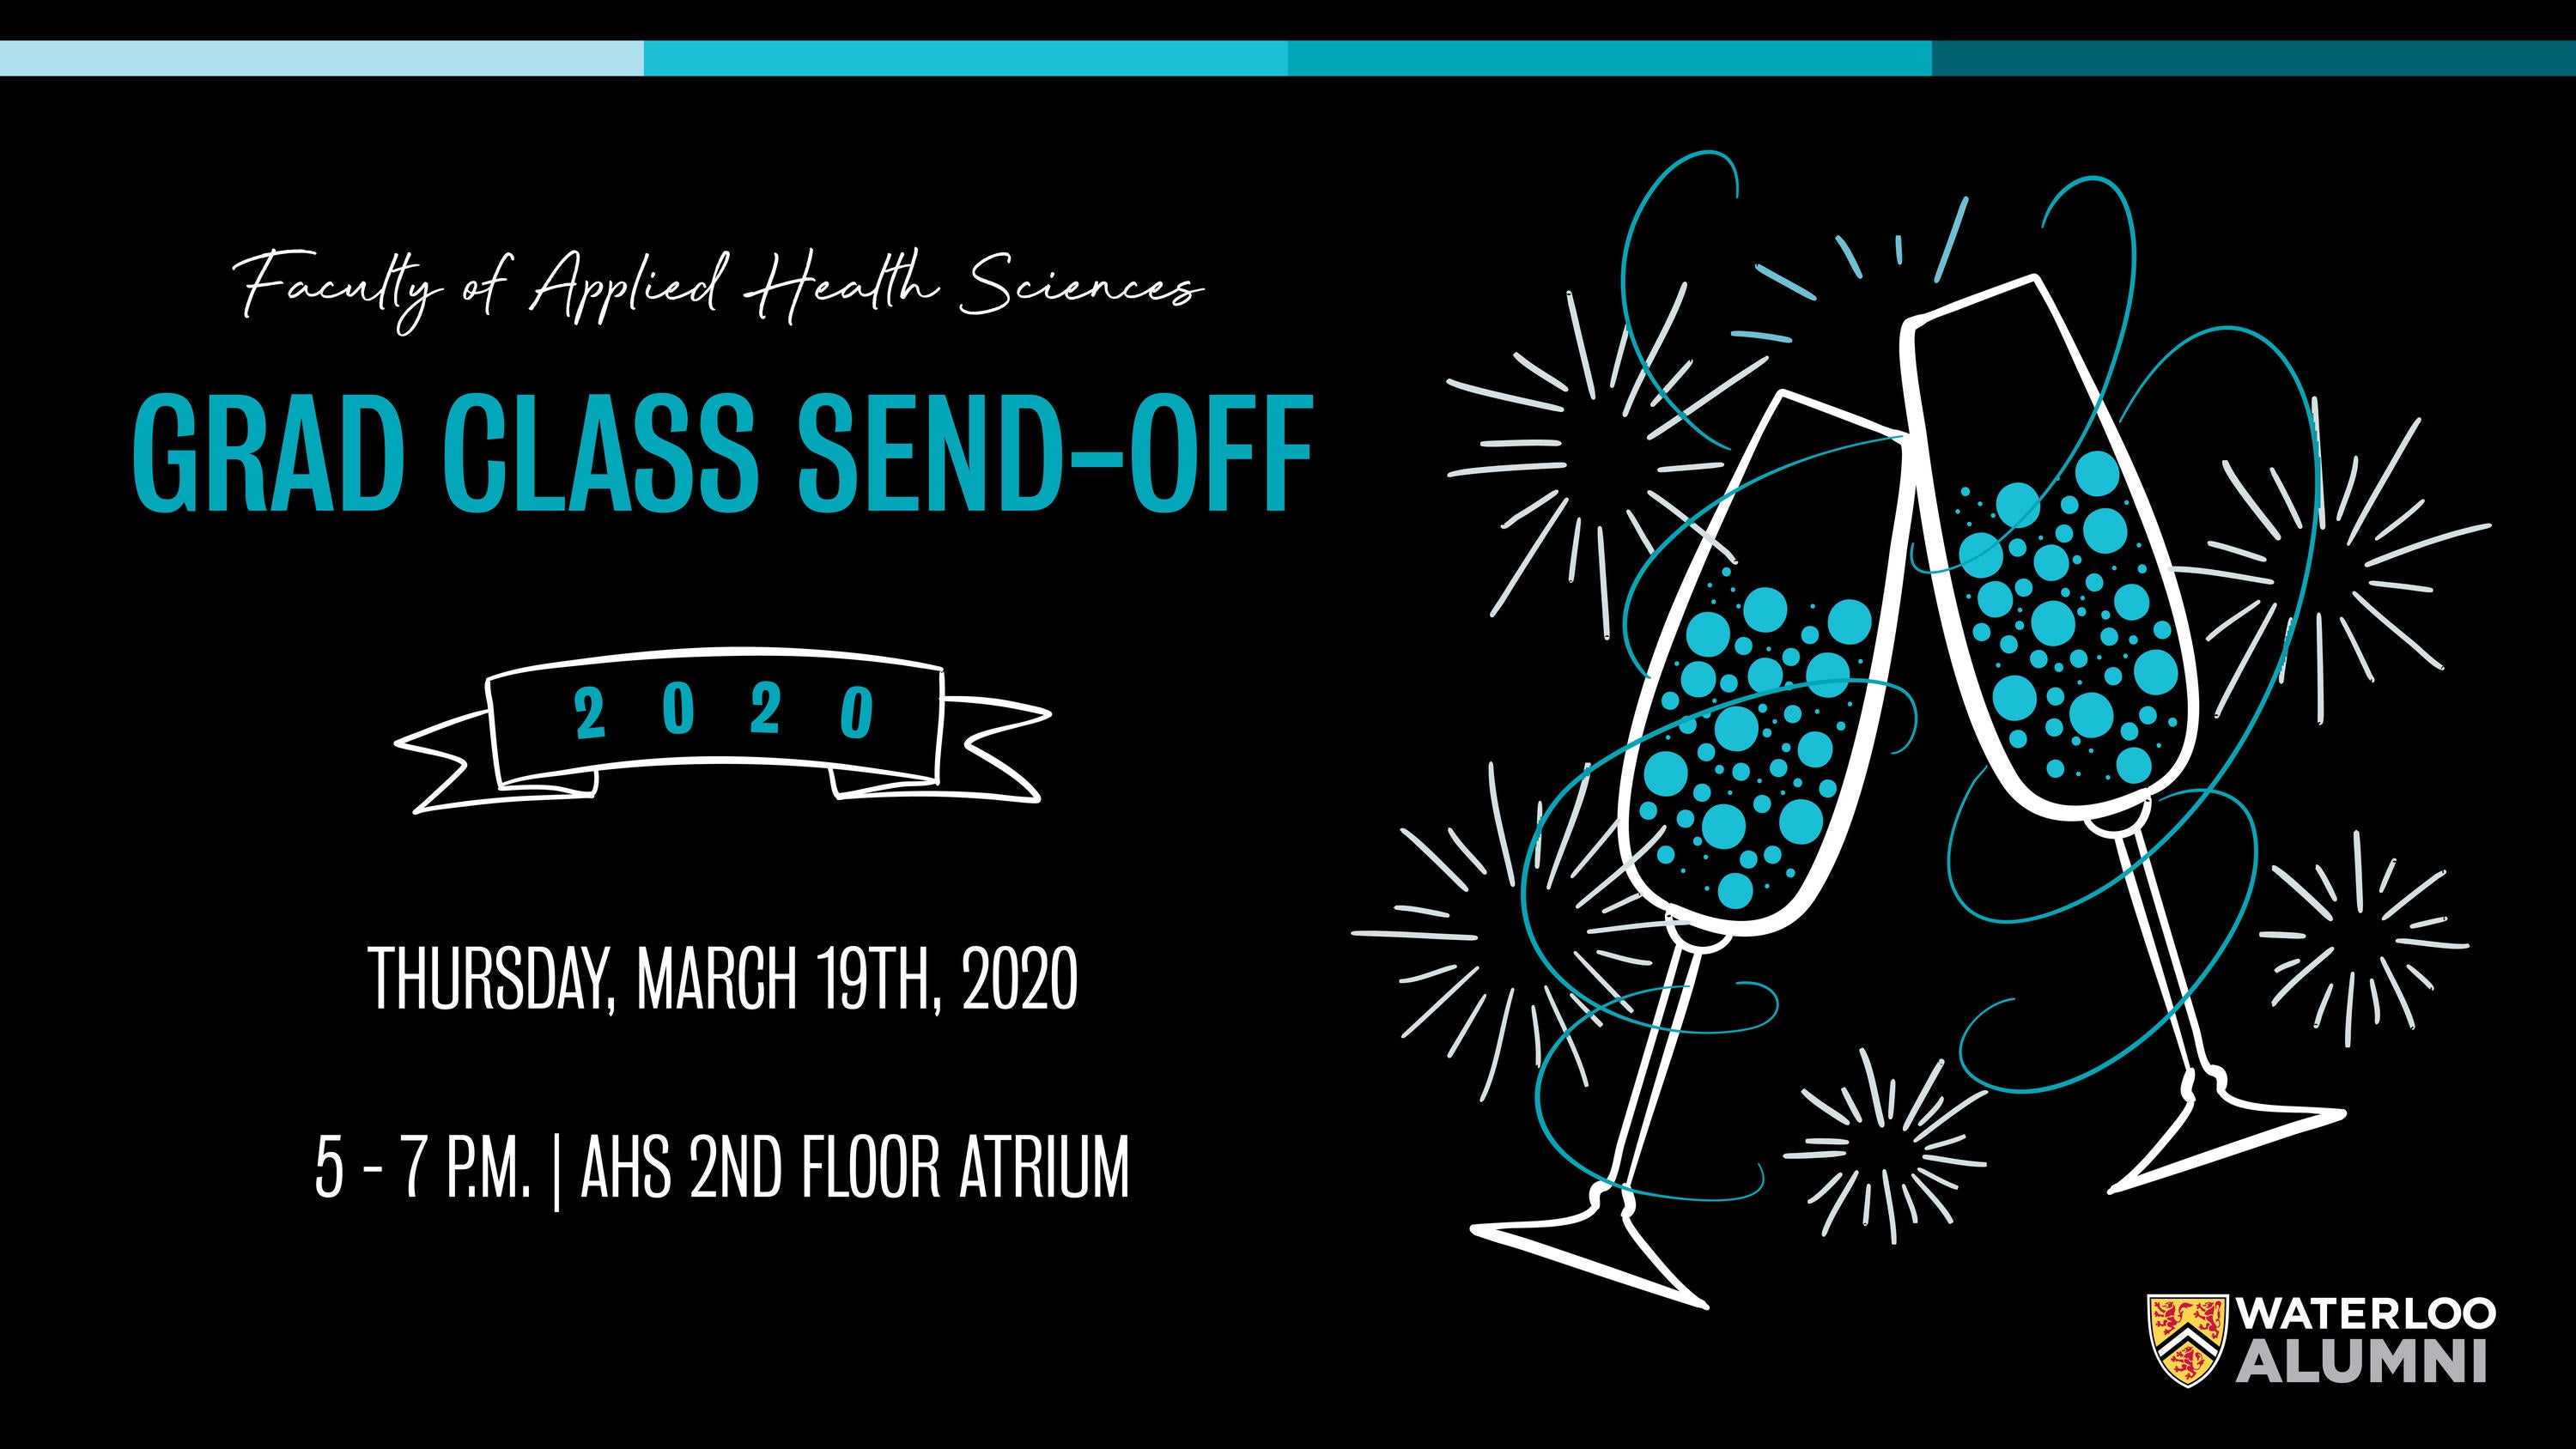 Event information: Faculty of AHS Grad Class Send-off 2020, Thursday, March 19th, 2020, 5-7PM, AHS 2nd Floor Atrium